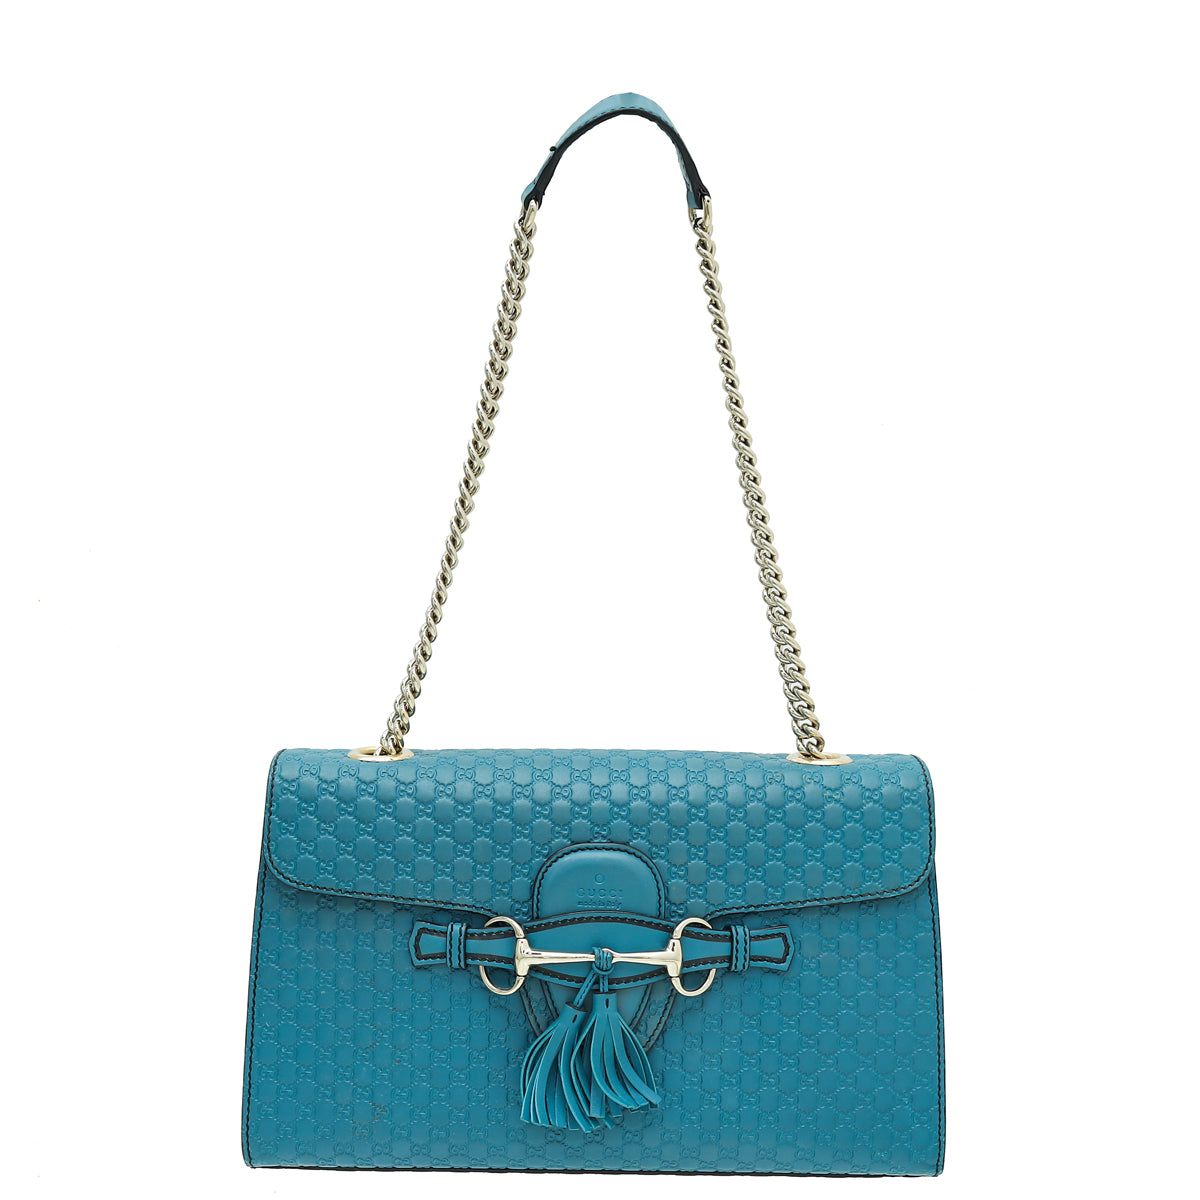 Gucci Tuquoise Microguccissima Emily Medium Bag